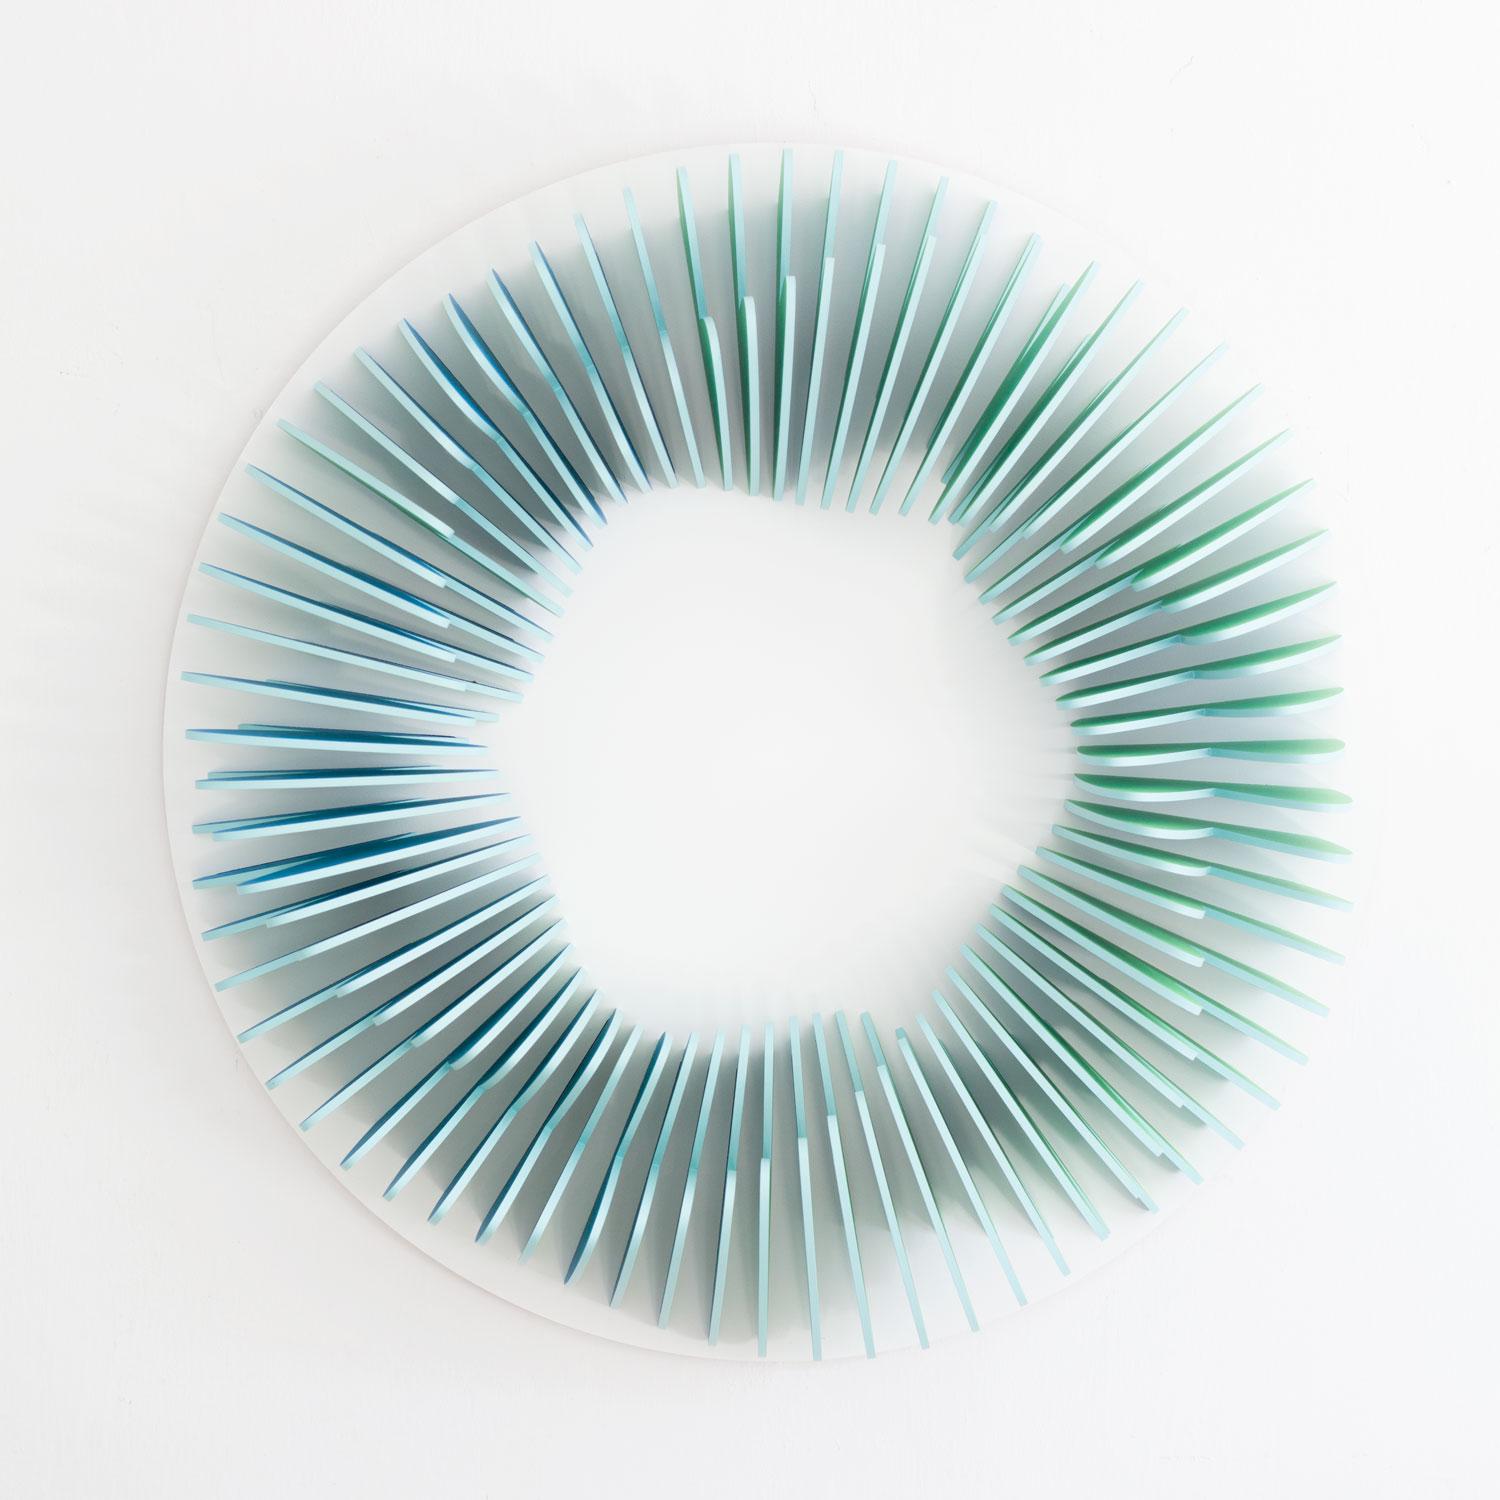 CC 102 - Blue green abstract geometric 3D wall circular sculpture - Abstract Geometric Sculpture by Anna Kruhelska